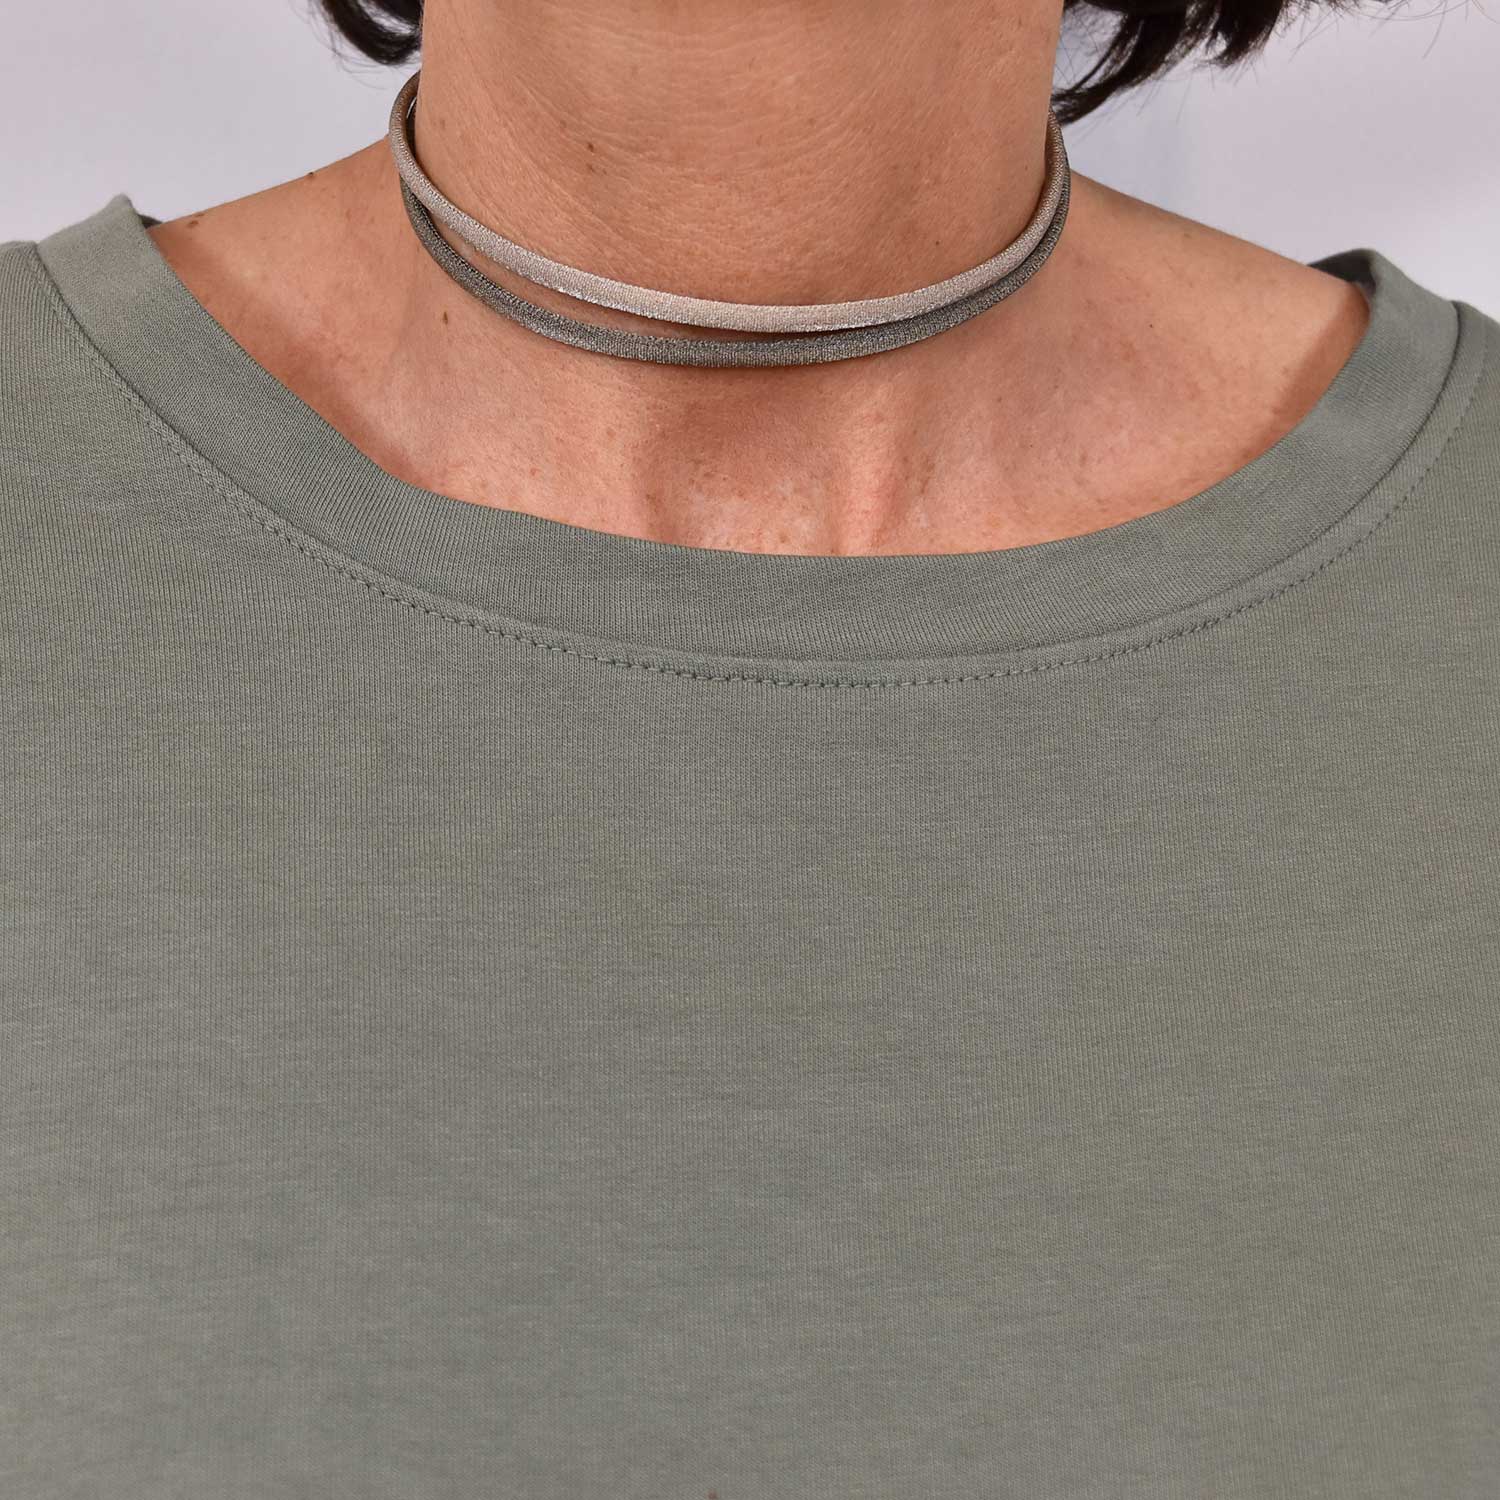 Kaki elastic necklace